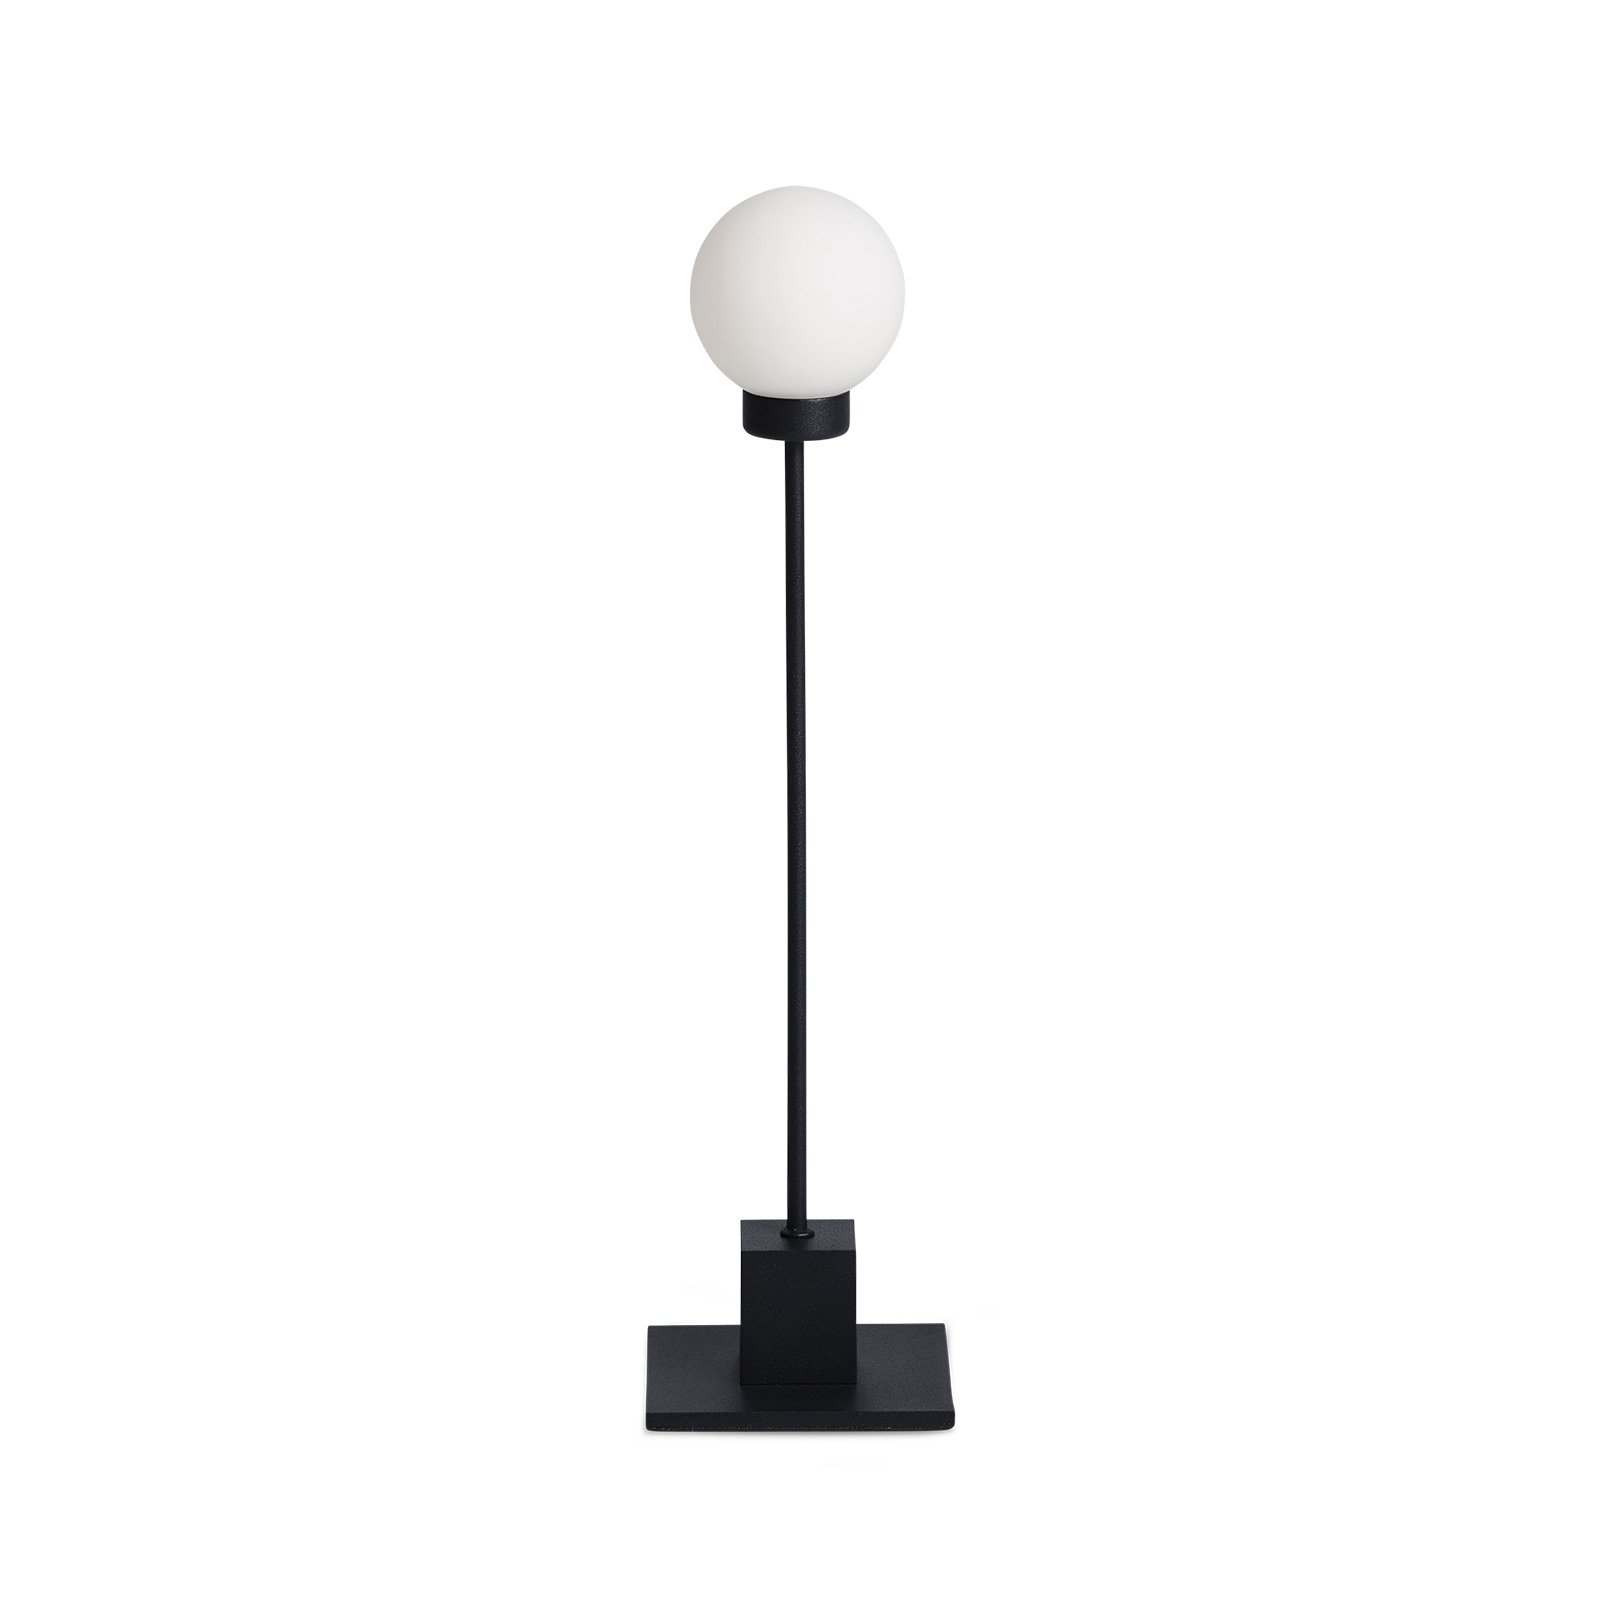 Northern table lamp Snowball, black